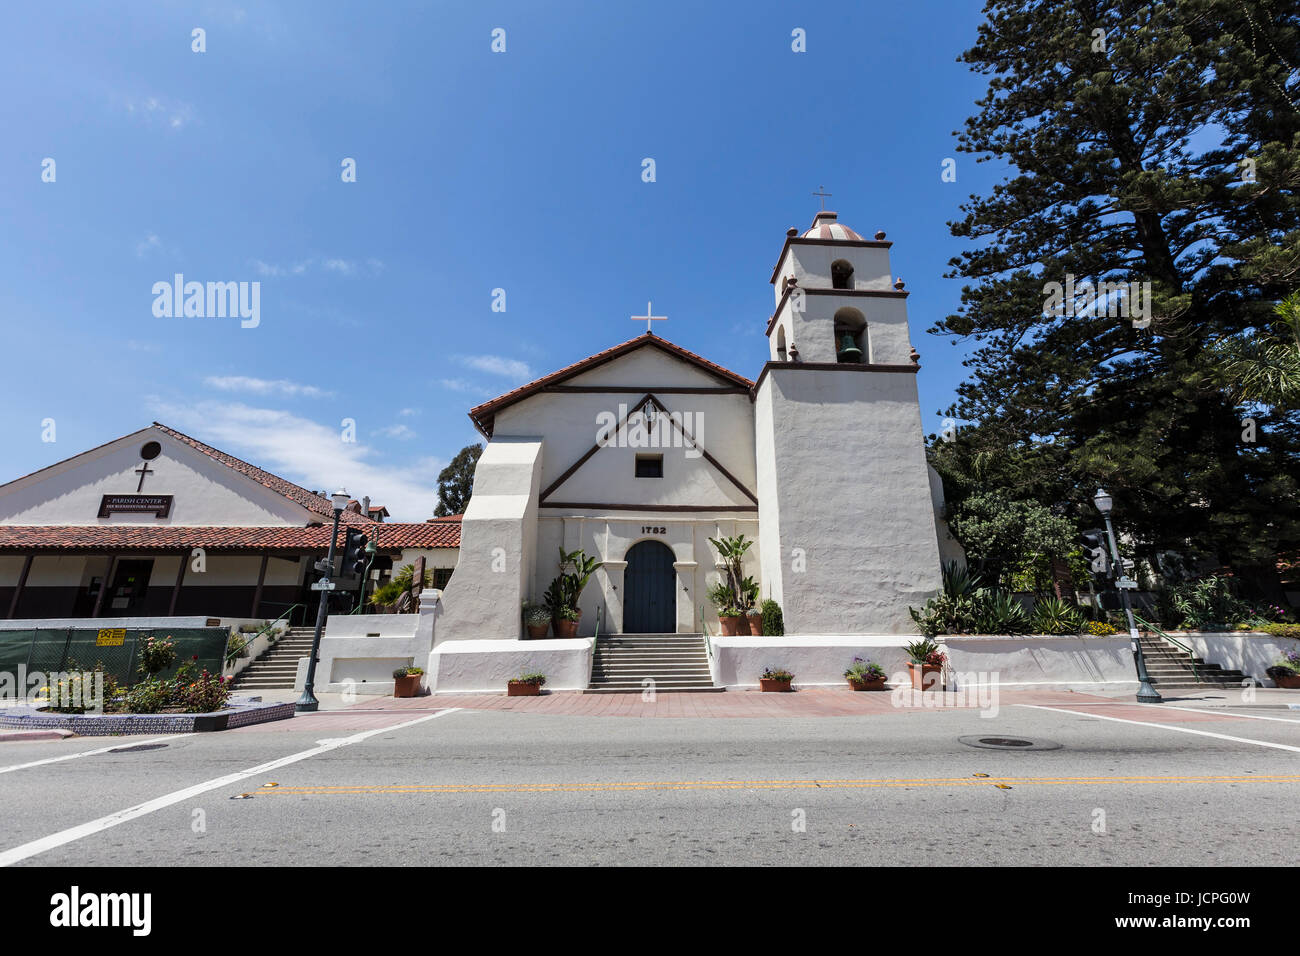 Ventura, Kalifornien, USA - 11. Juni 2017: Front-Fassade der historischen Ventura Mission Gebäude in Südkalifornien. Stockfoto